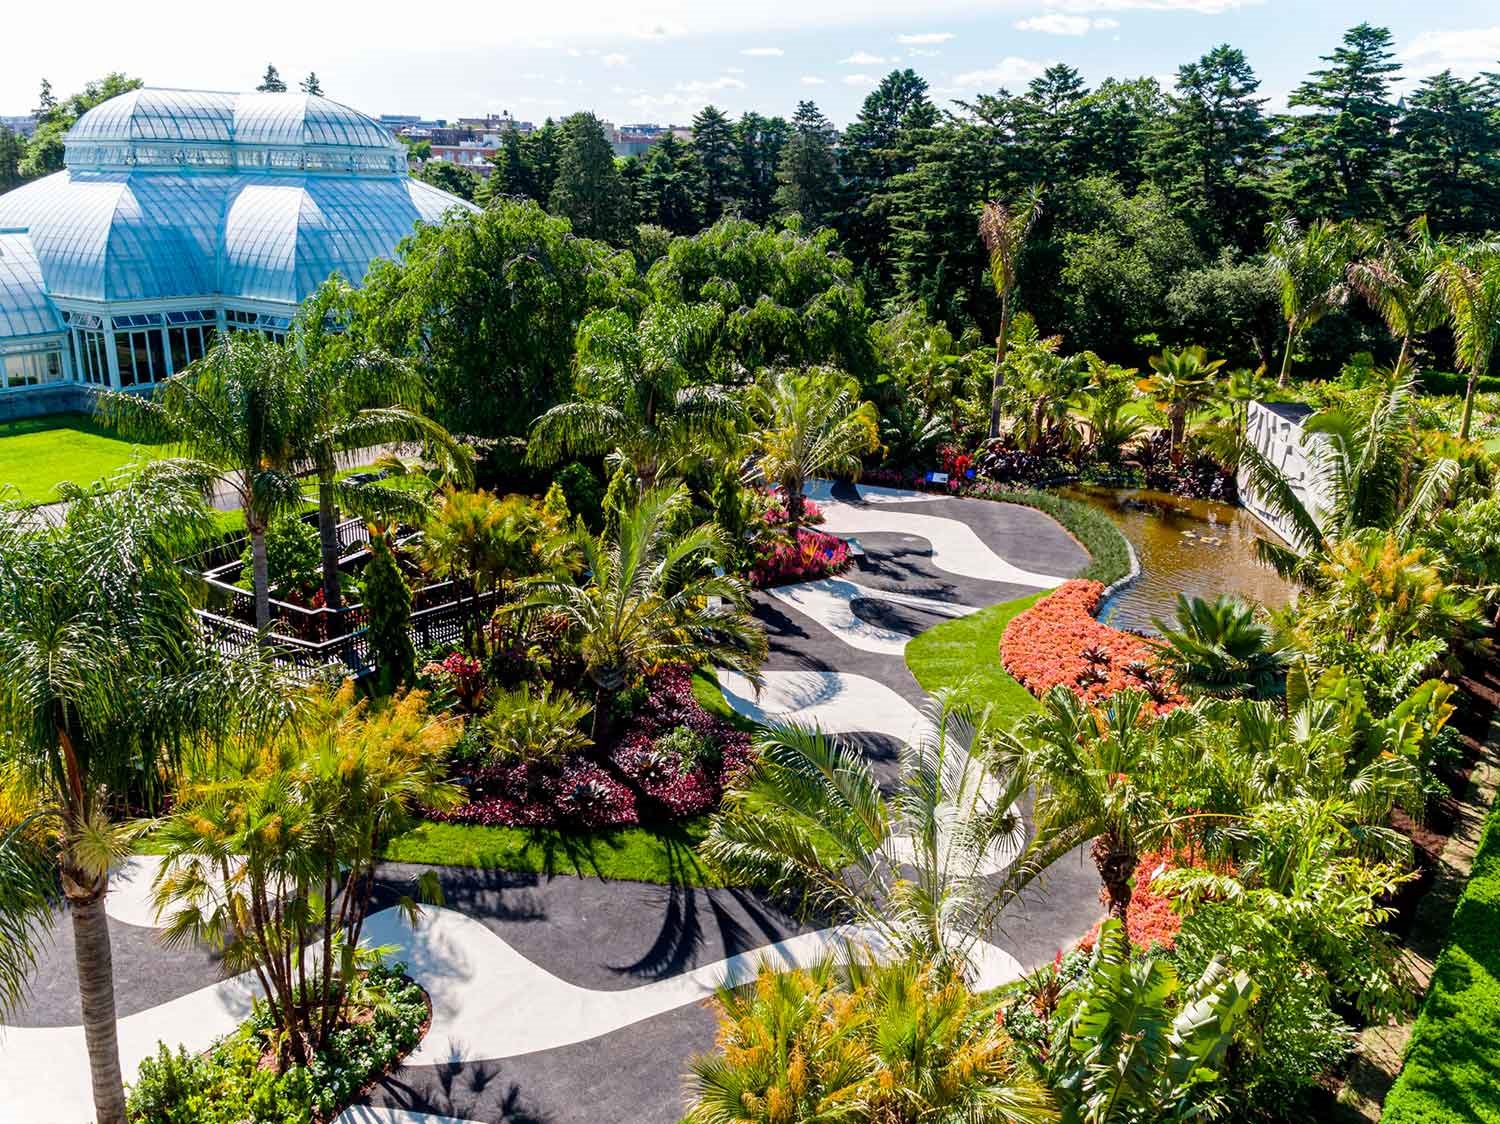 vista aerea del jardin modernista de la exposición Brazilian Modern: The Living Art of Roberto Burle Marx en el New York Botanical Garden